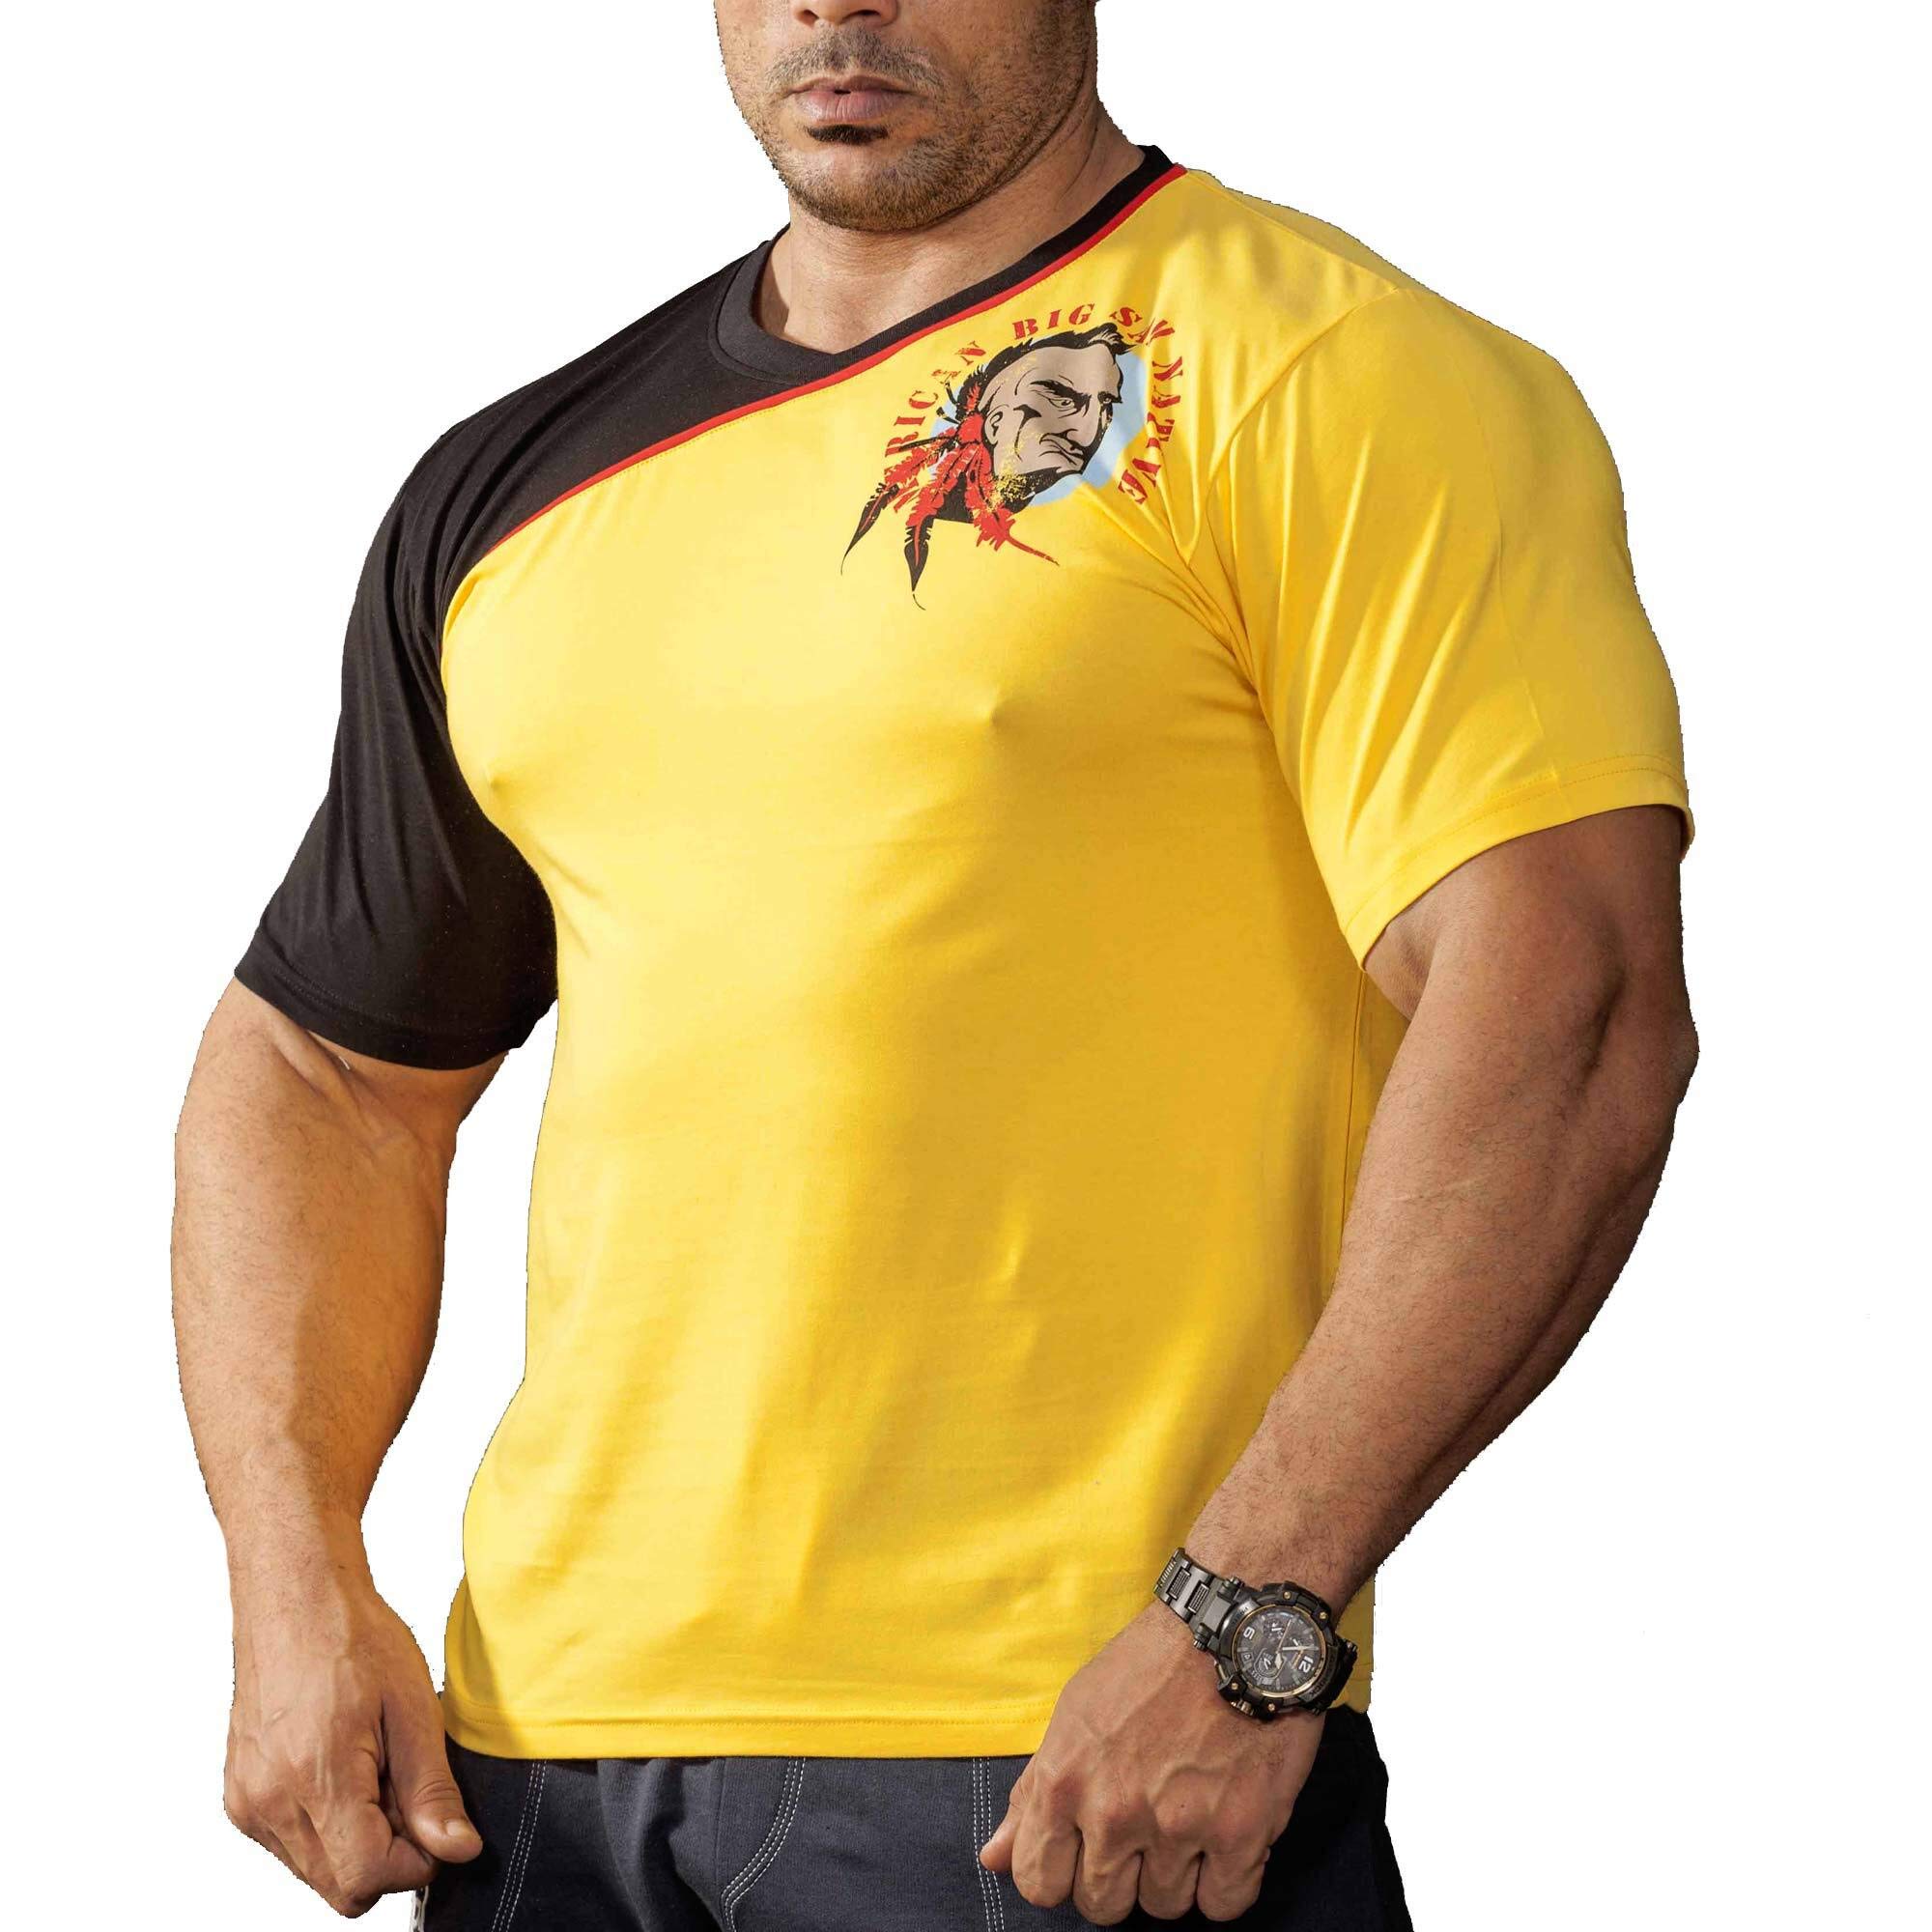 Big SM Sportswear MUSCLEWEAR Shirt T-Shirt Stretch Shirt Bodybuilding Gym Fitness Herren halbarm 2829 gelb XL